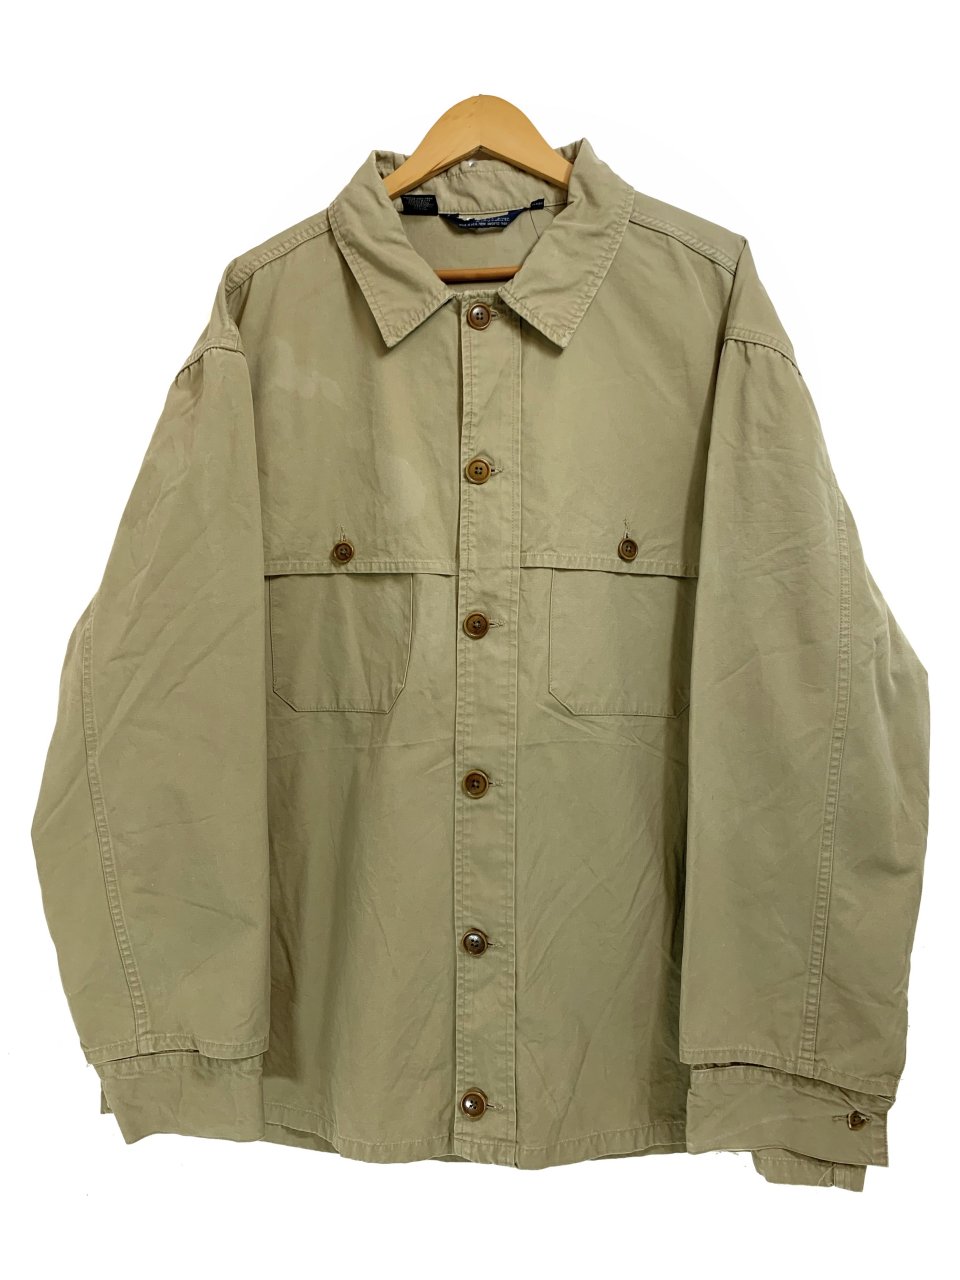 USA製 80s Polo Ralph Lauren Cotton Hunting L/S Shirt カーキ XL